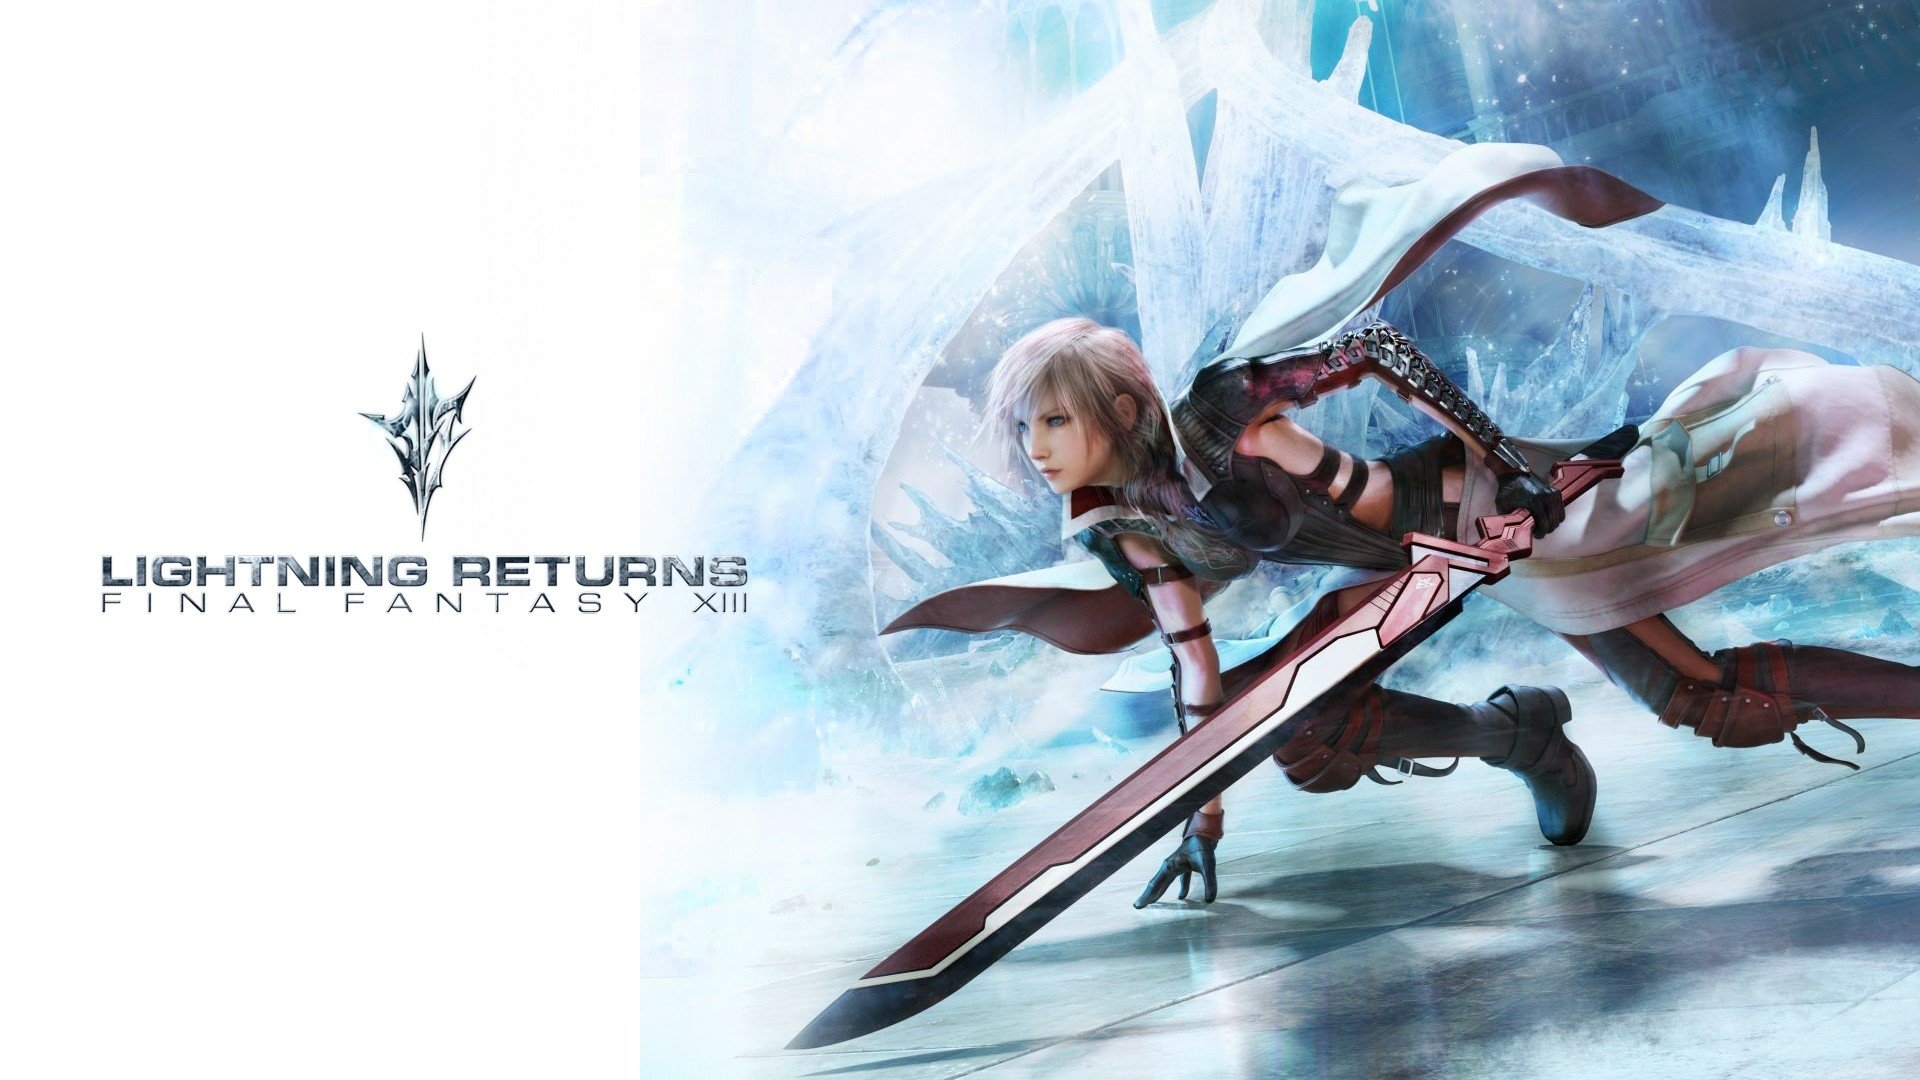 Lightning Returns Final Fantasy XIII Full HD Wallpaper And Background